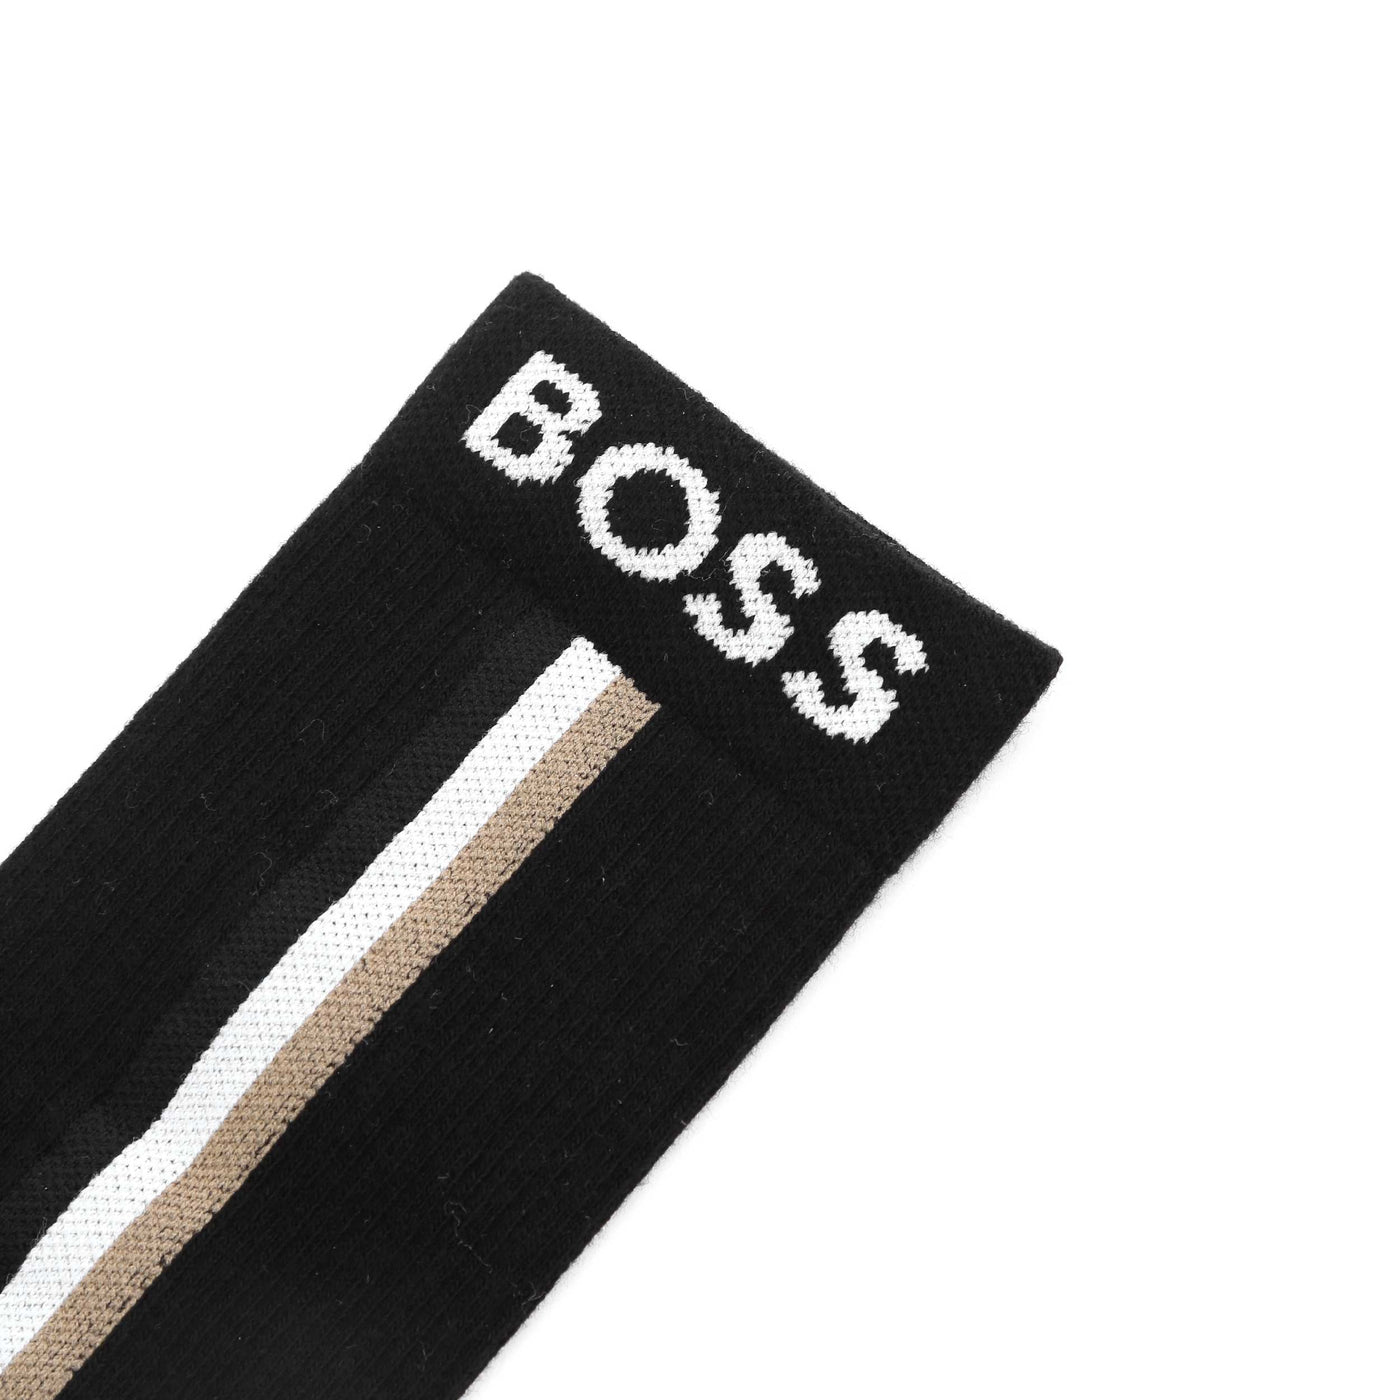 BOSS RS Rib Iconic CC Sock in Black